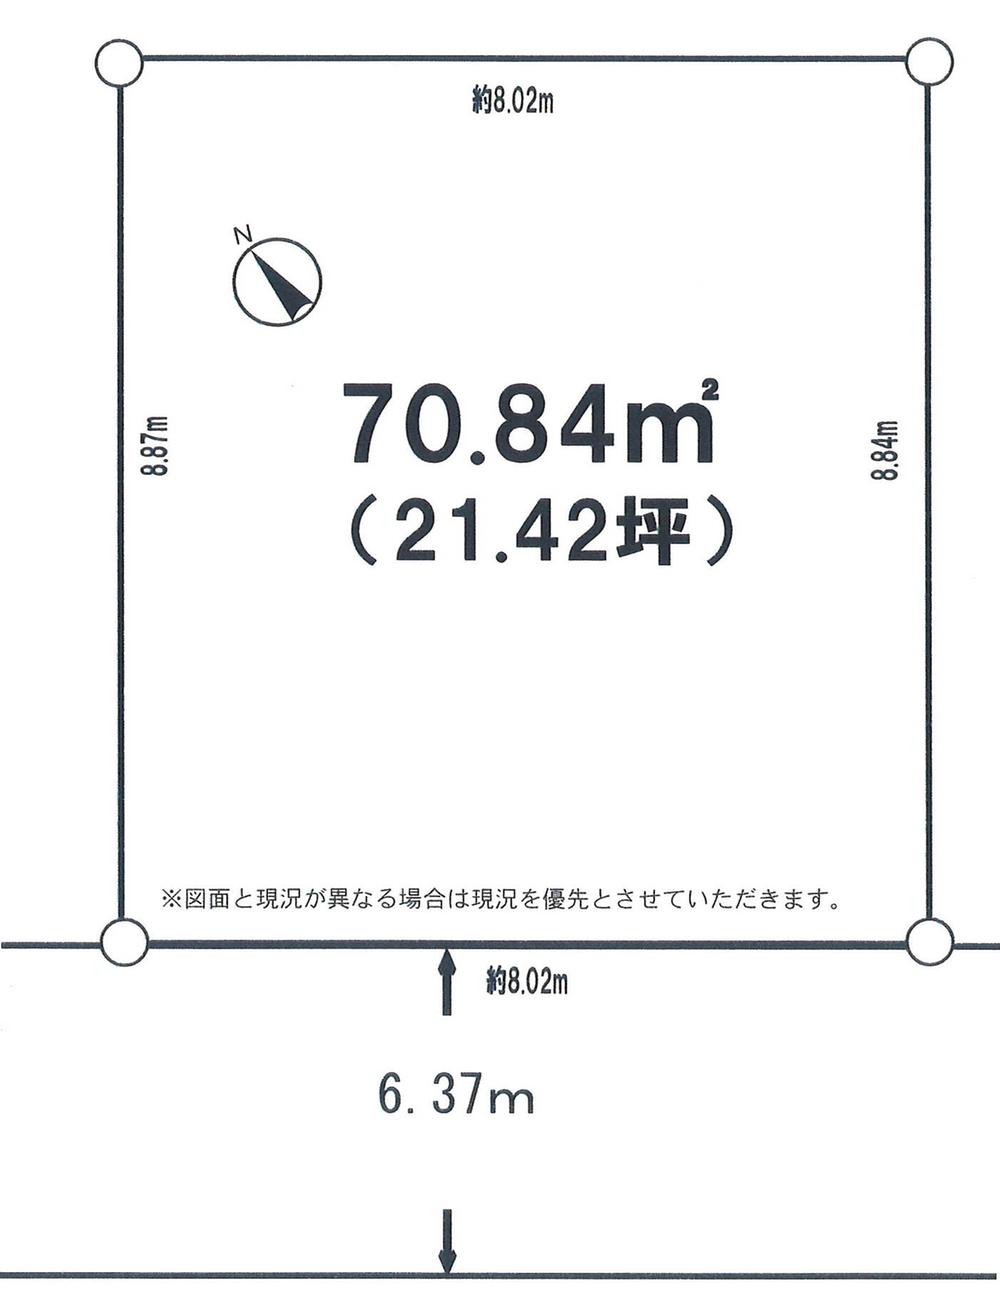 Compartment figure. Land price 5.3 million yen, Land area 70.84 sq m